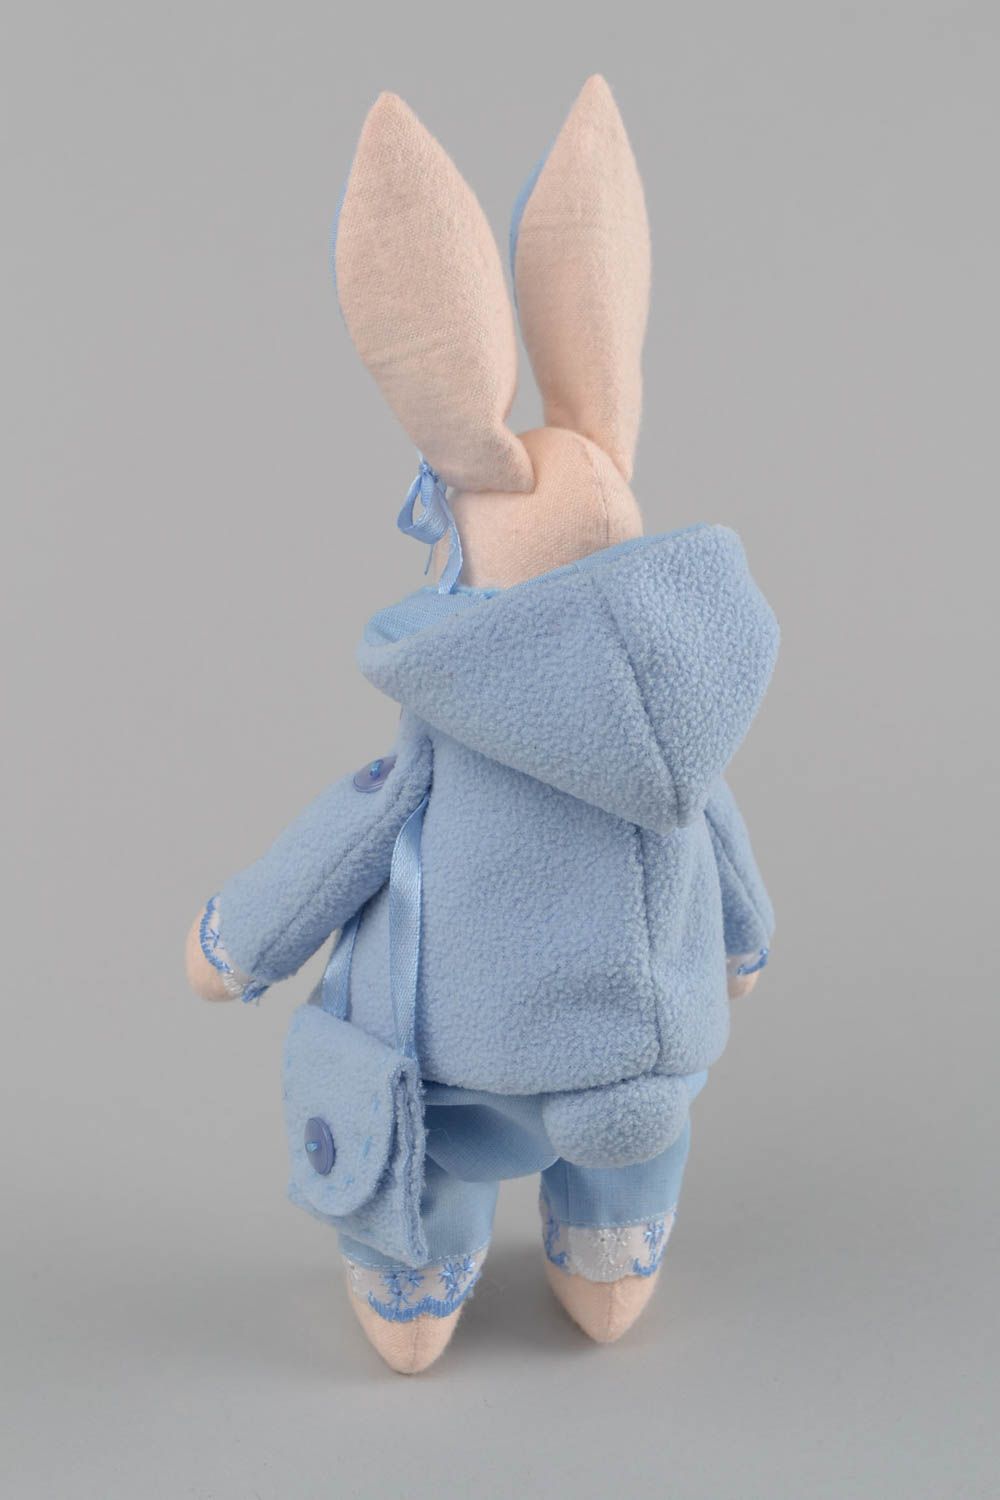 Handmade designer soft toy beige rabbit in blue fleece coat for interior decor photo 5